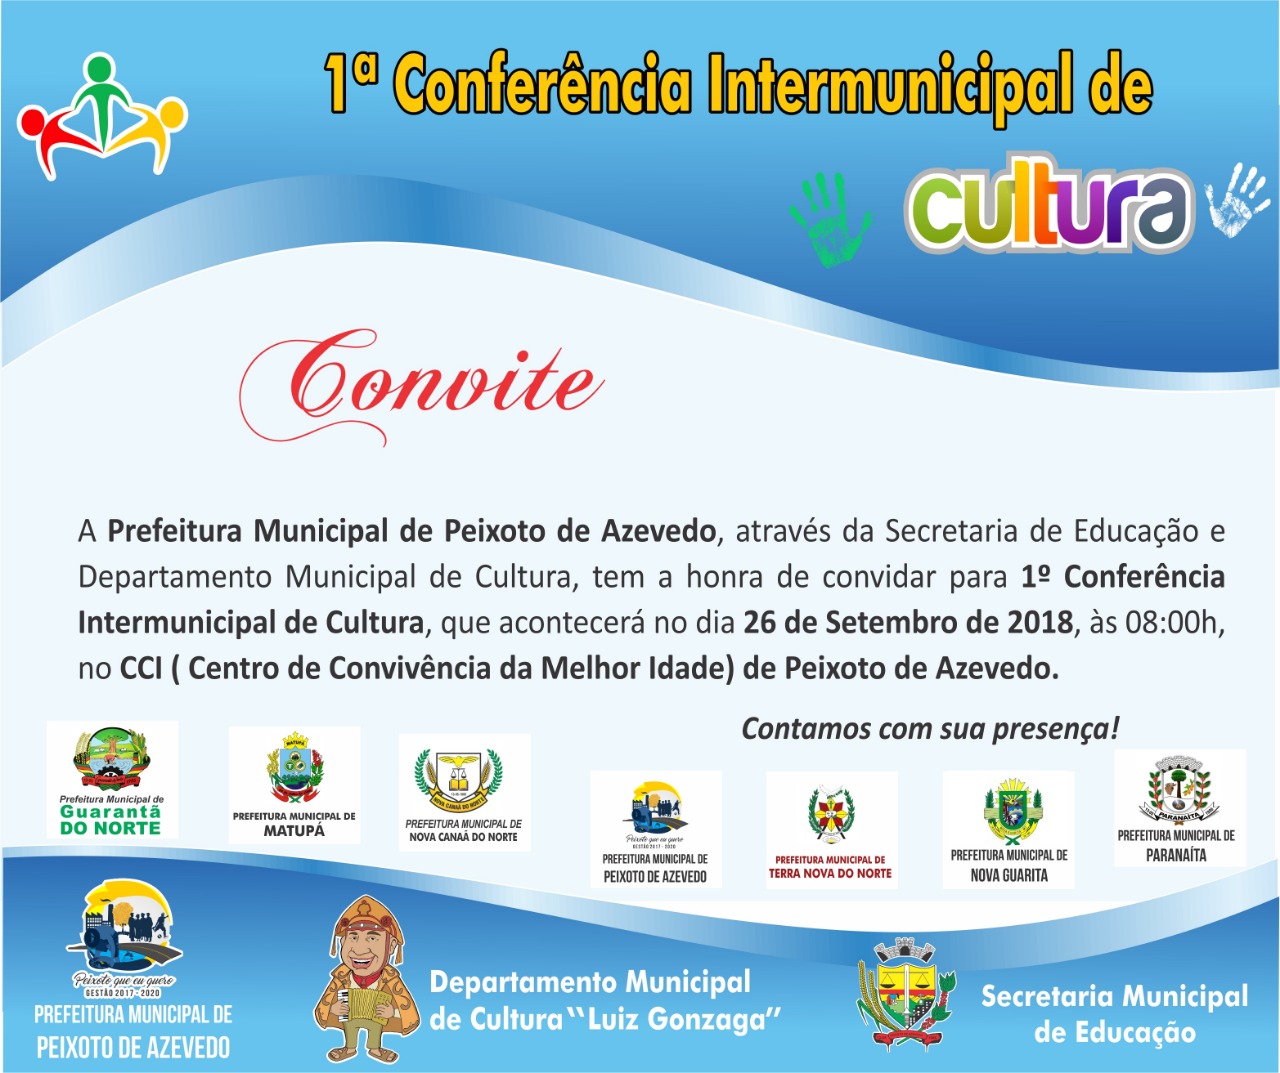 Dia 26 acontece a Conferência Intermunicipal de Cultura de Peixoto de Azevedo